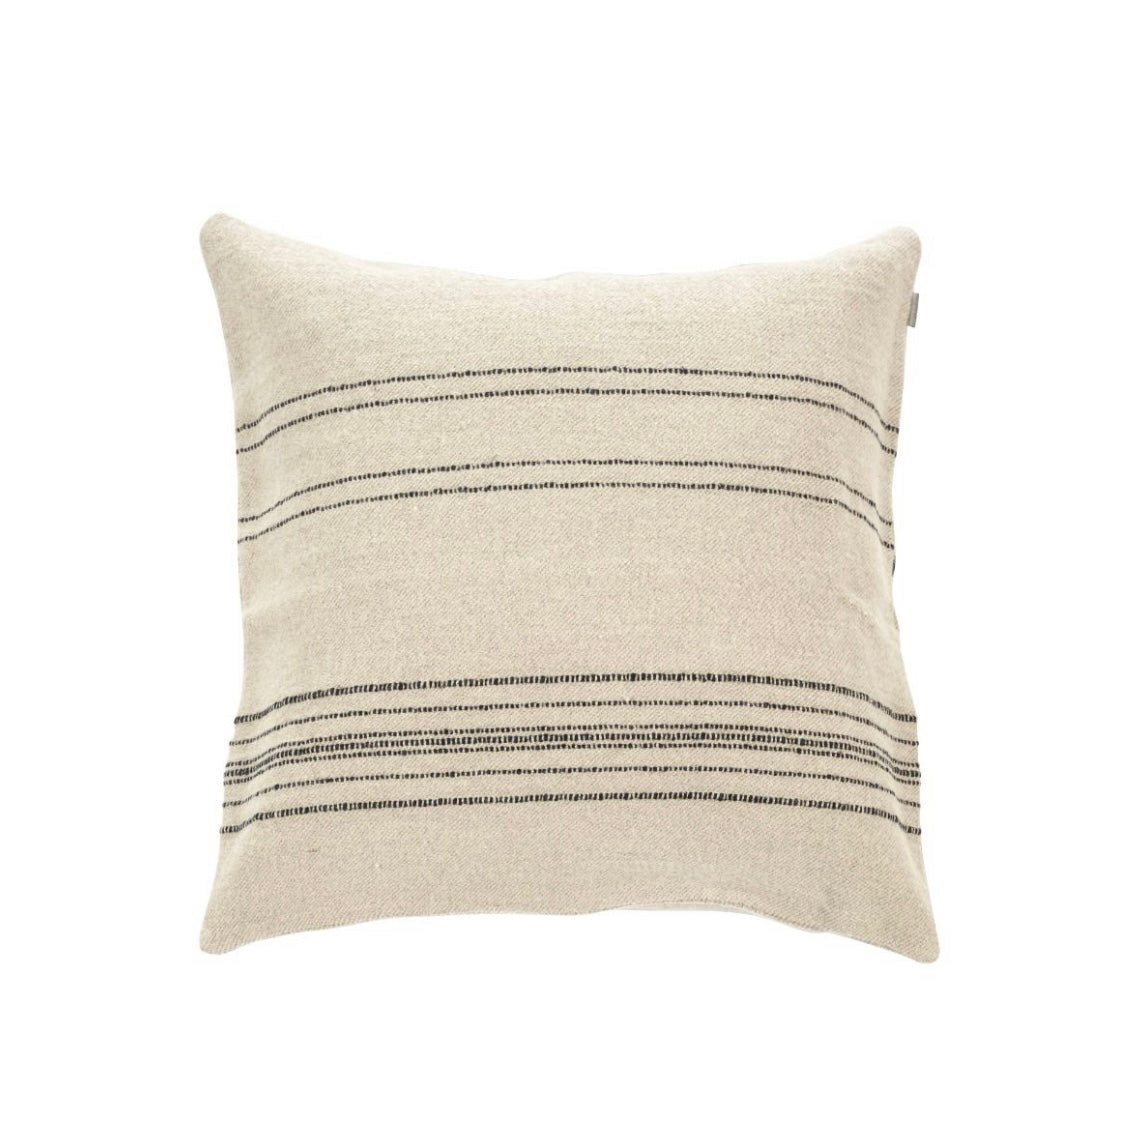 The Moroccan Stripe Pillow